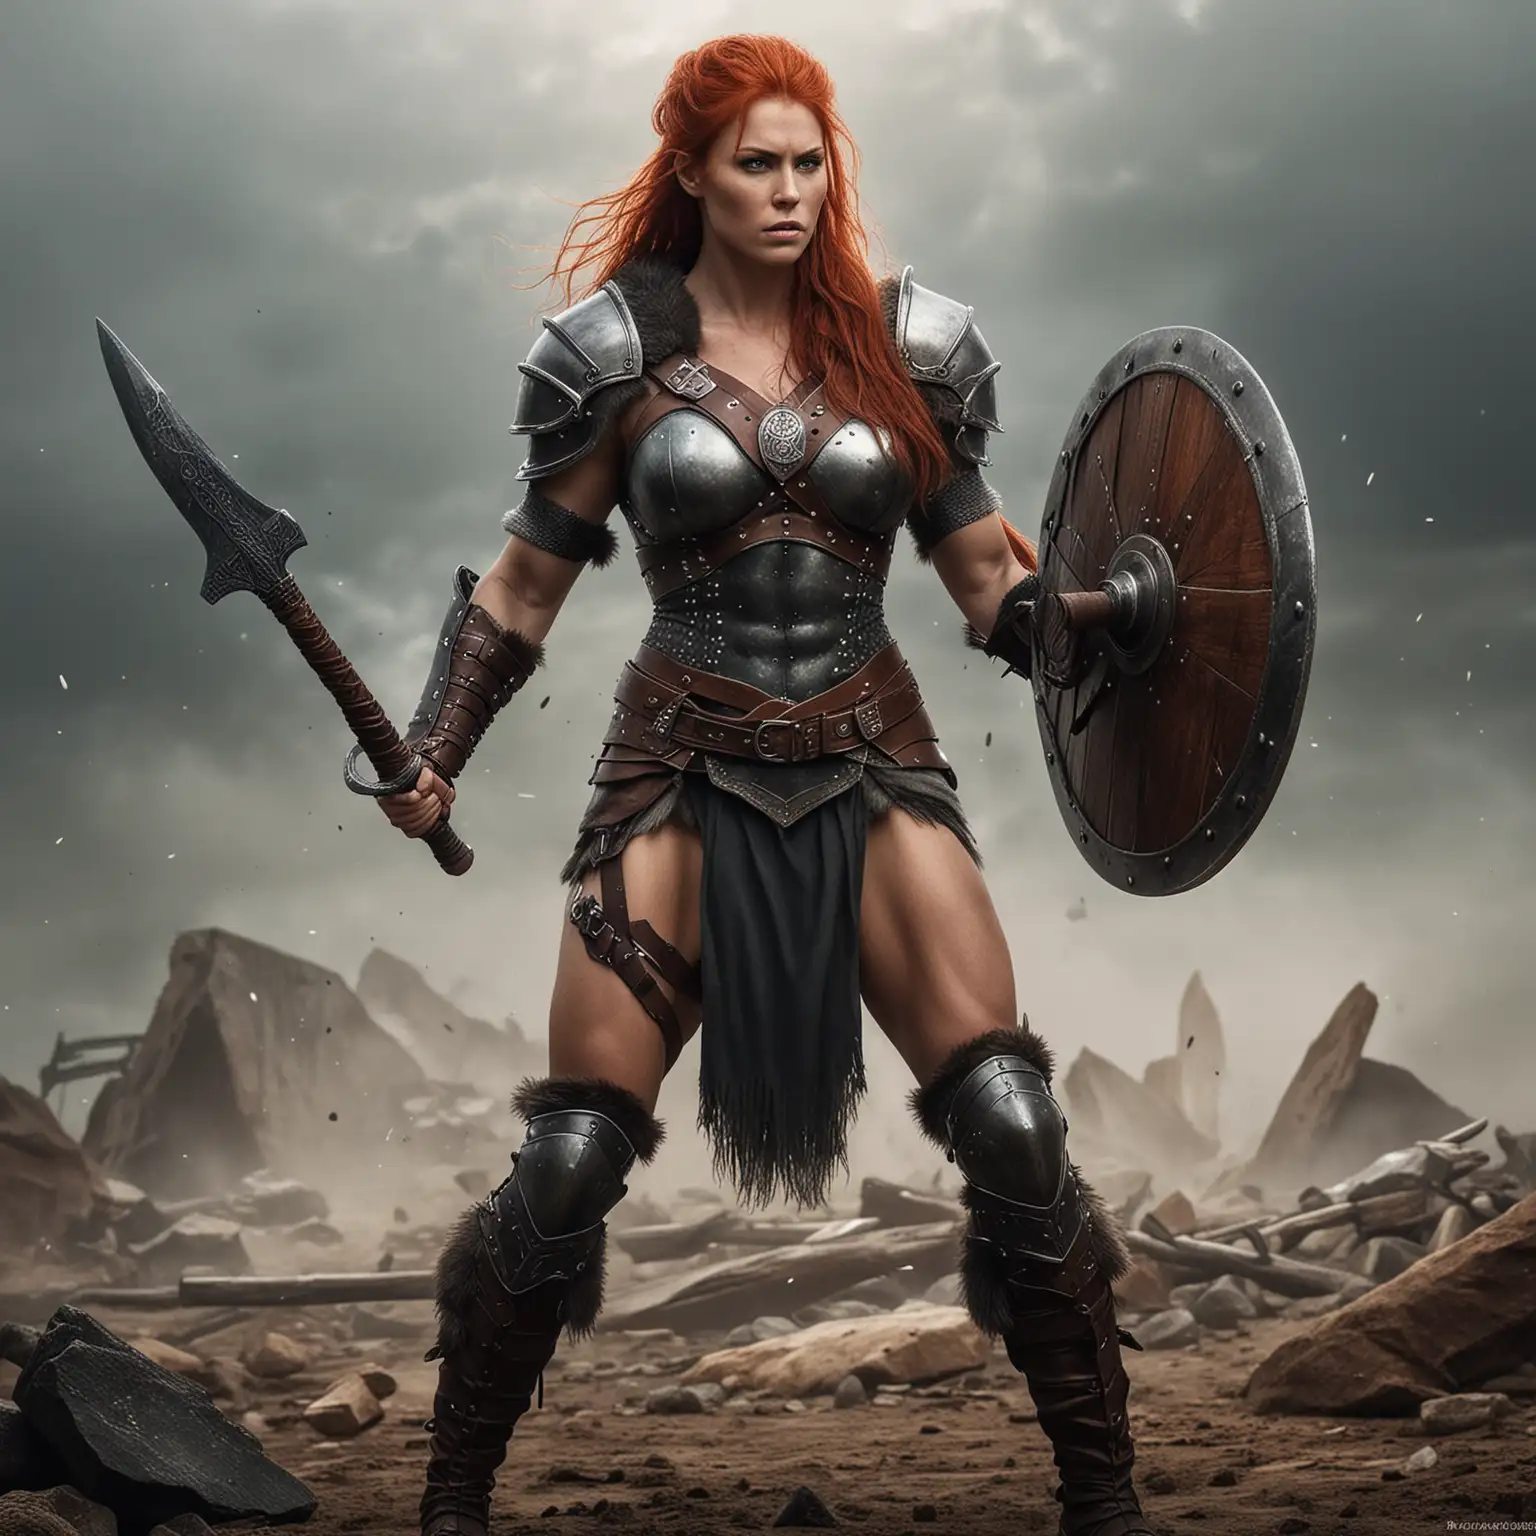 Formidable Viking Barbarian Woman Brandishing War Axe in Sturdy Leather Armor